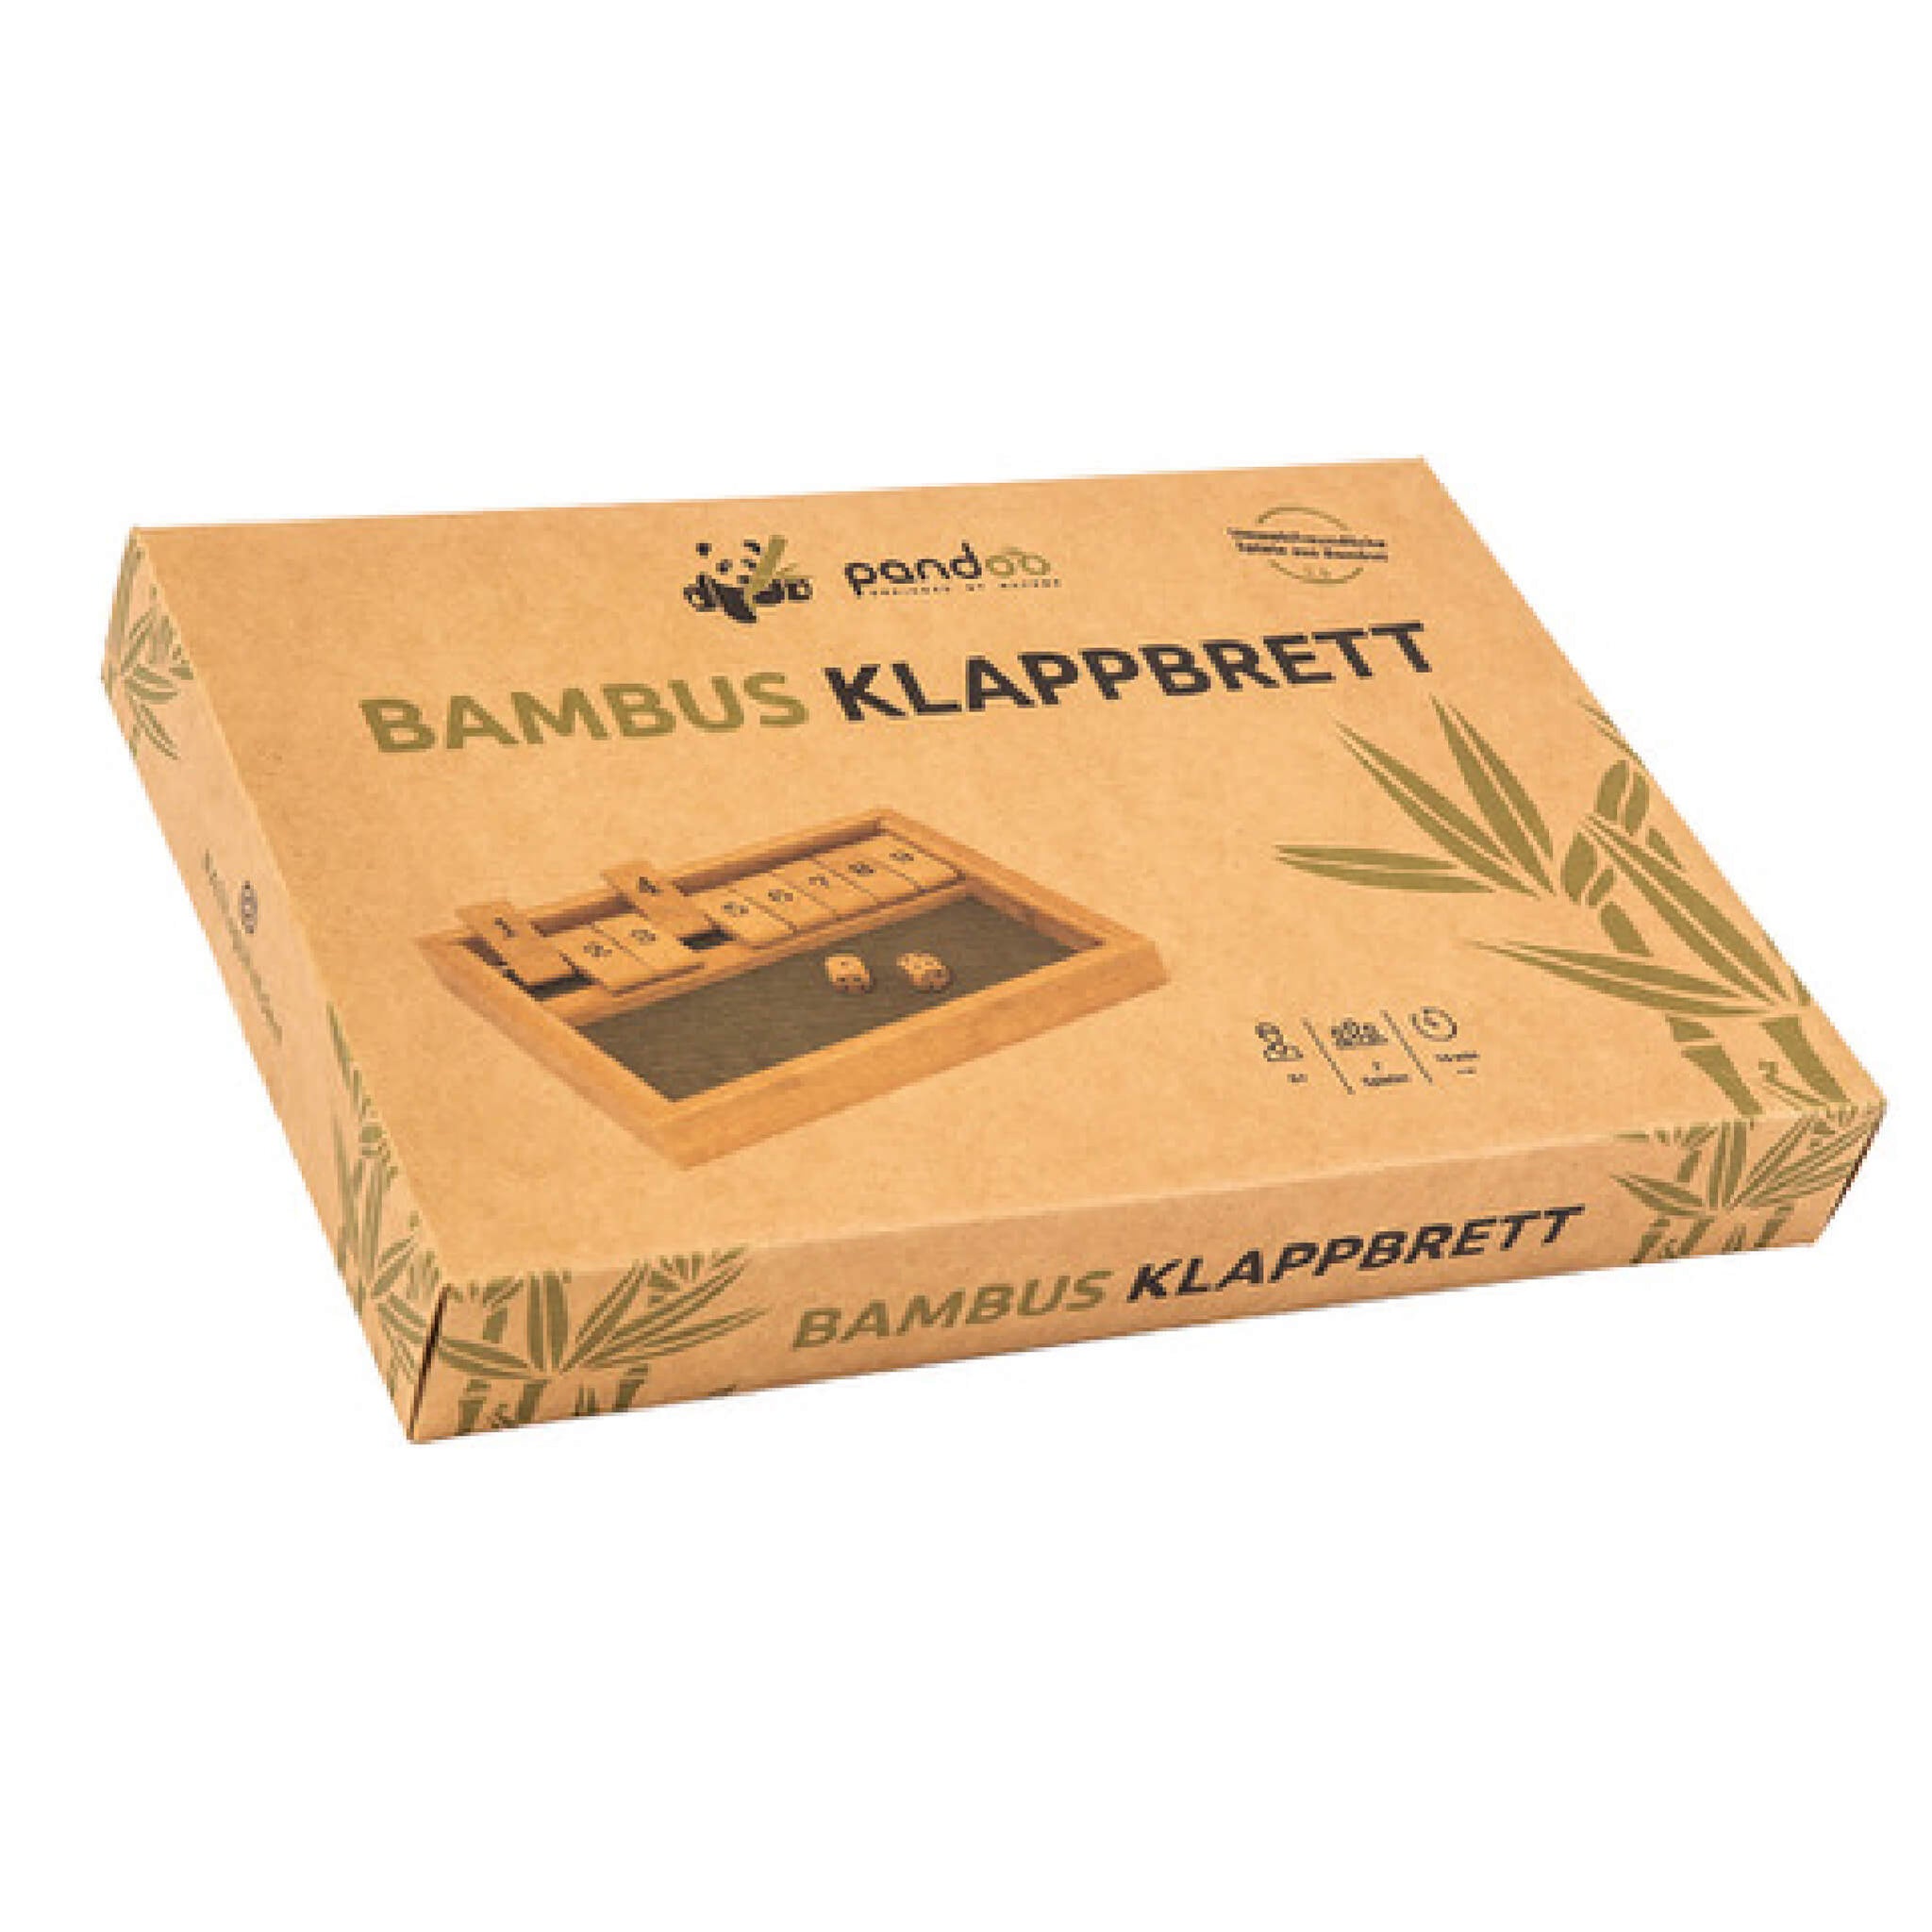 kraft paper packaging of bamboo klappbrett game